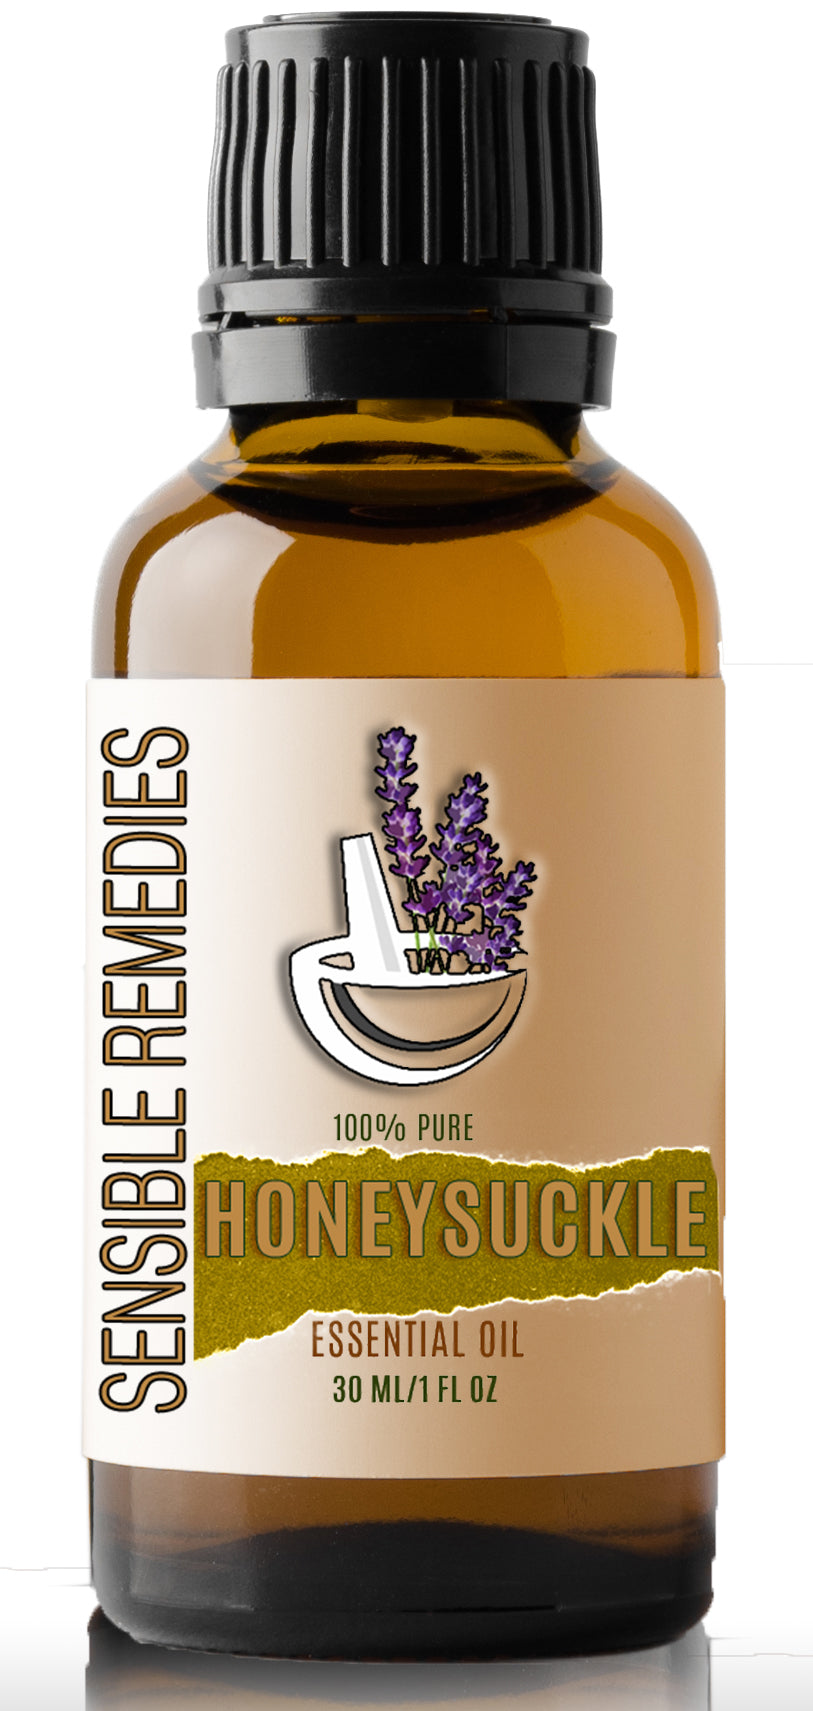 Honeysuckle Essential Oil, Pimple Cleansing Oil, Smoothing Wrinkle